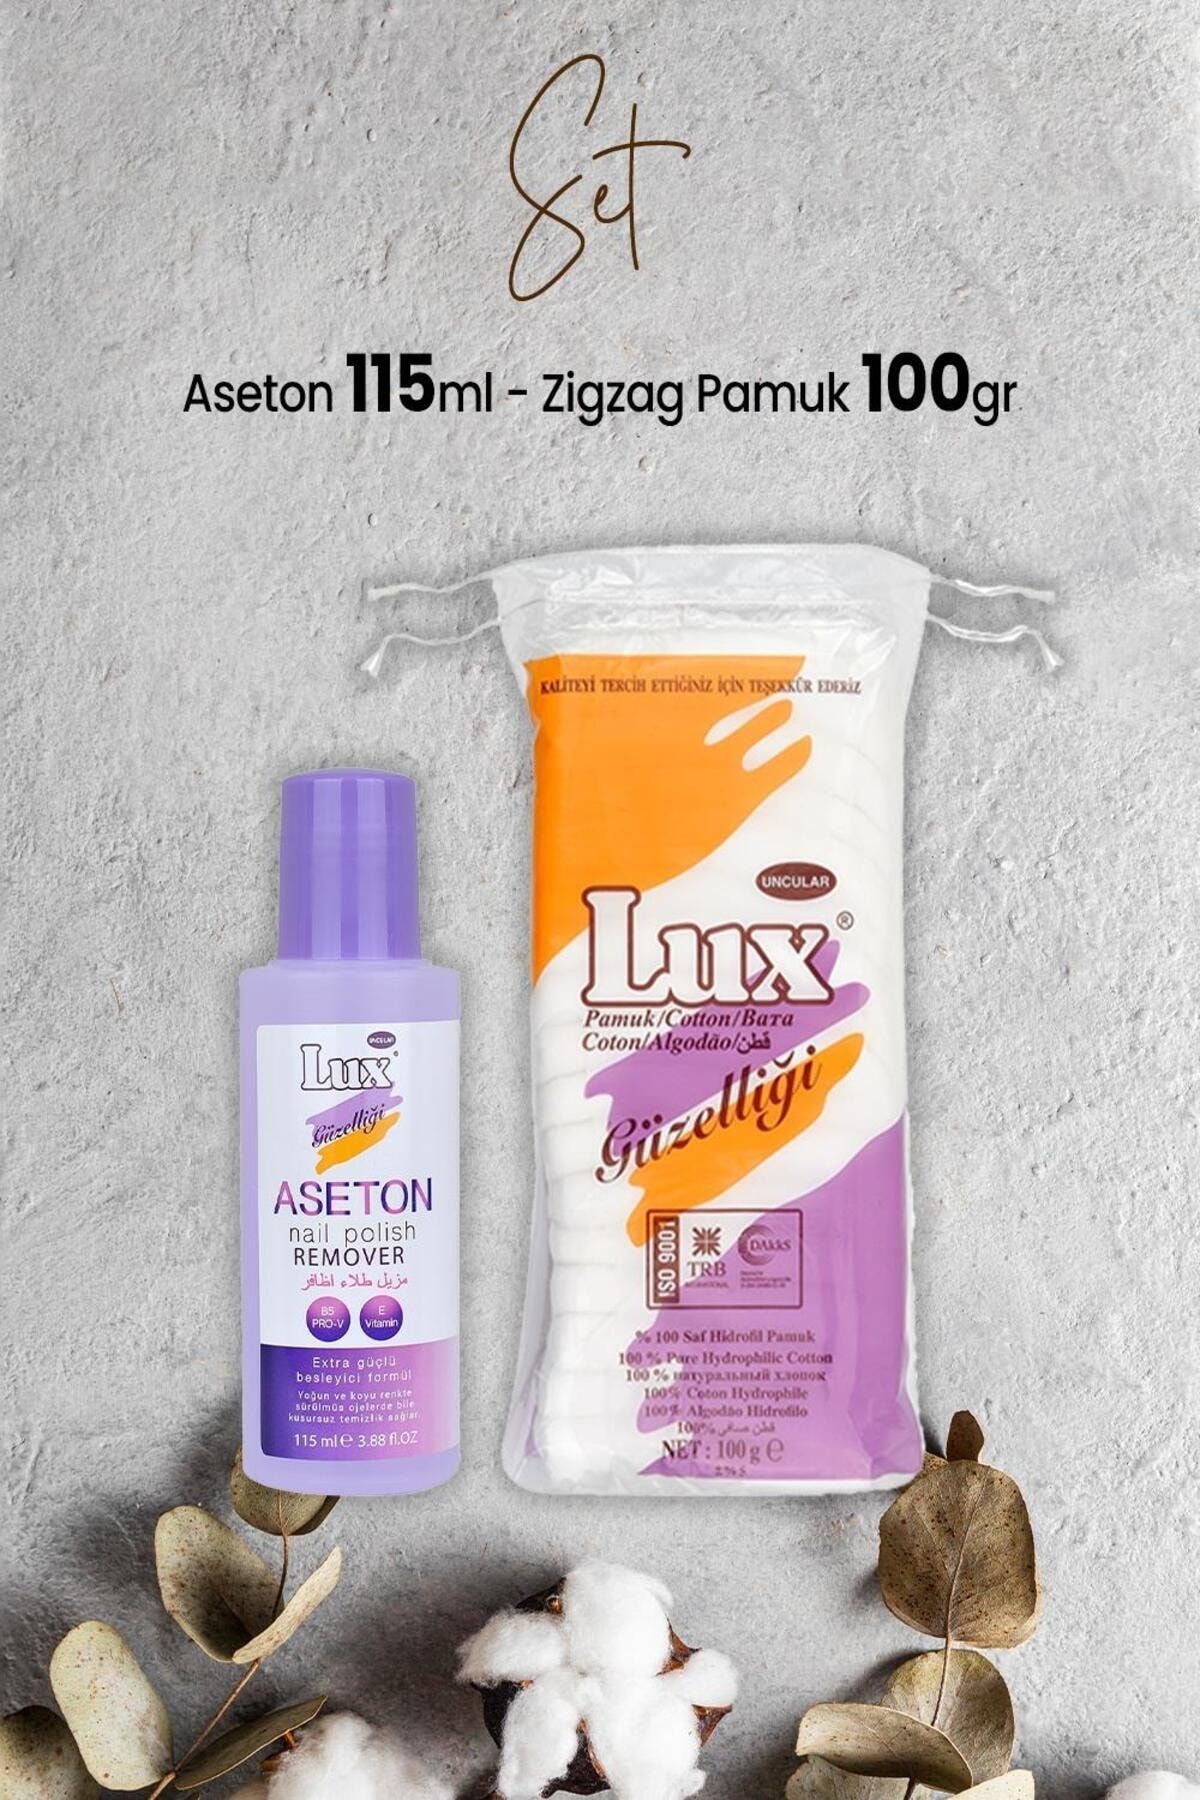 LUX Aseton 115 ml ve Zigzag Pamuk 100 gr